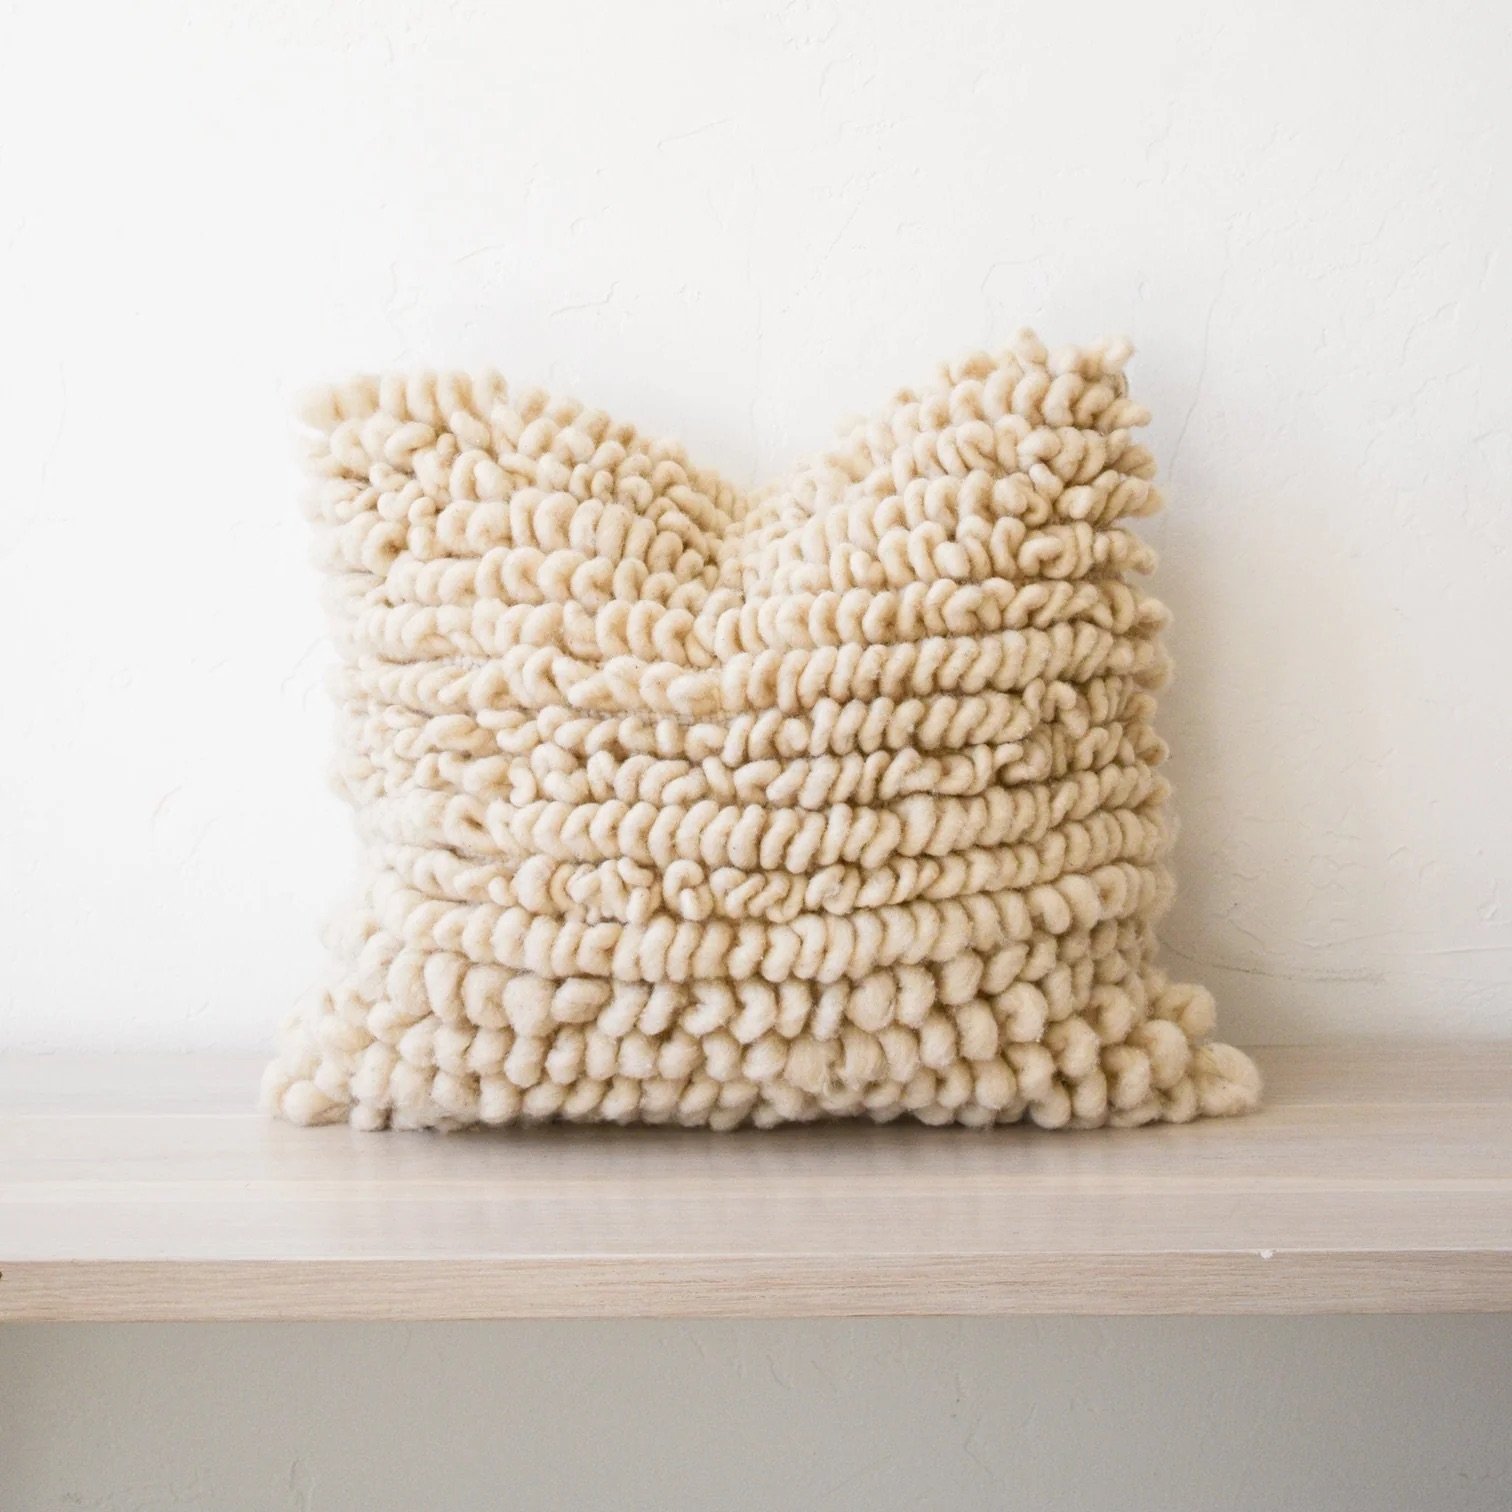 treko-pillows-makun-collection-natural-white-looped-pillow-26-x-26-by-treko-36498744180991_1512x.jpeg